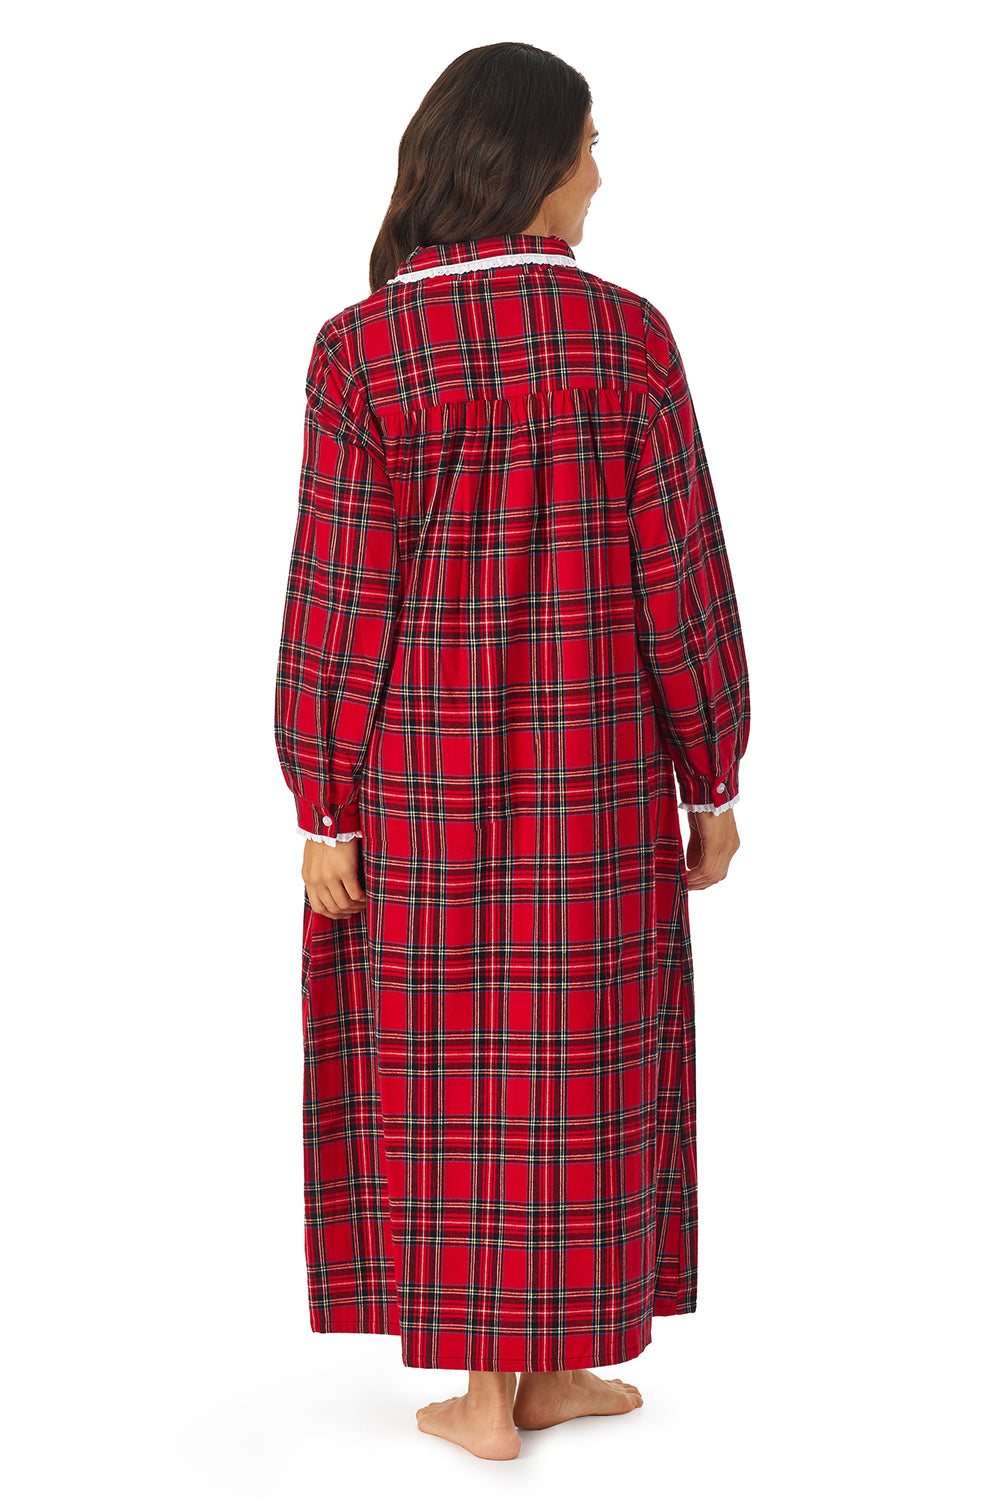 Lanz of Salzburg Peterpan Collar Flannel Cotton Nightgown